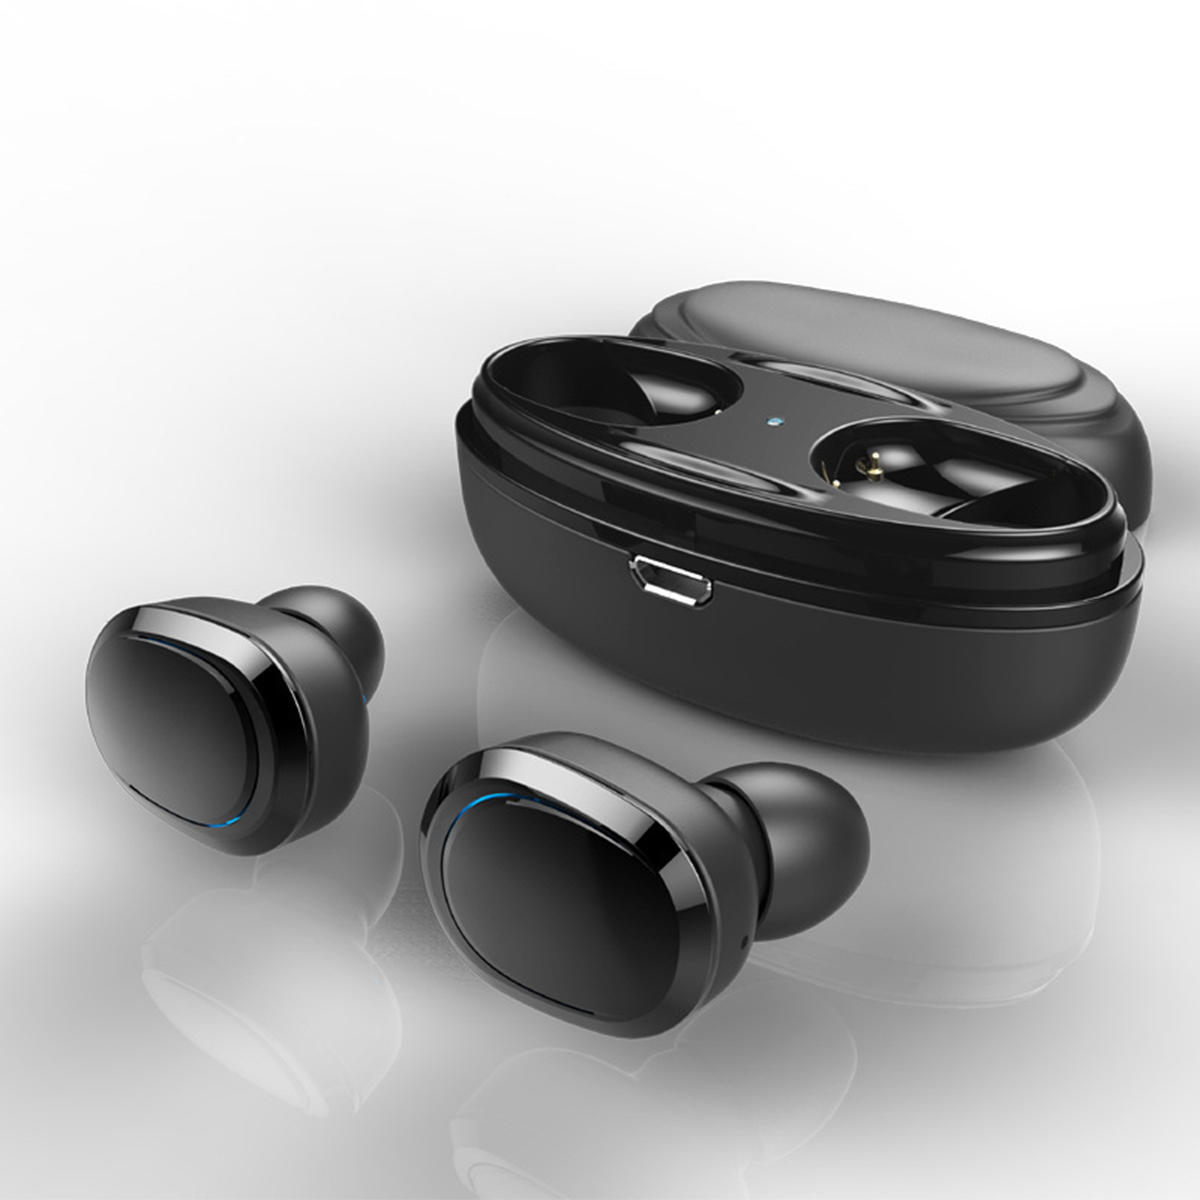 [True Wireless] T12 TWS Draadloze bluetoothoortelefoon Binaurale stereohoofdtelefoon met oplaaddoos